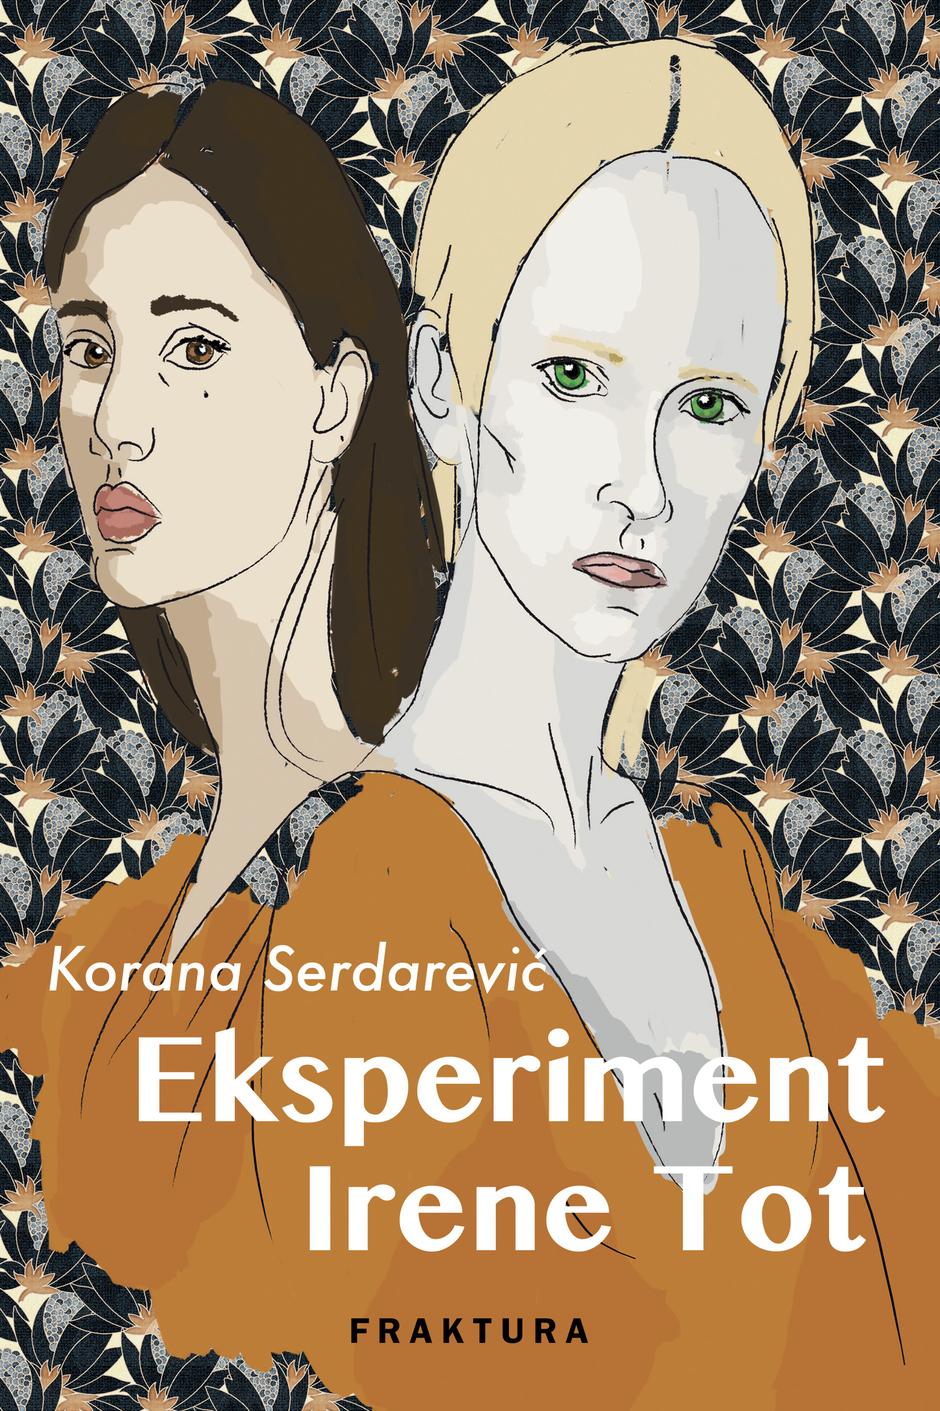 Korana Serdarević | Author: Fraktura